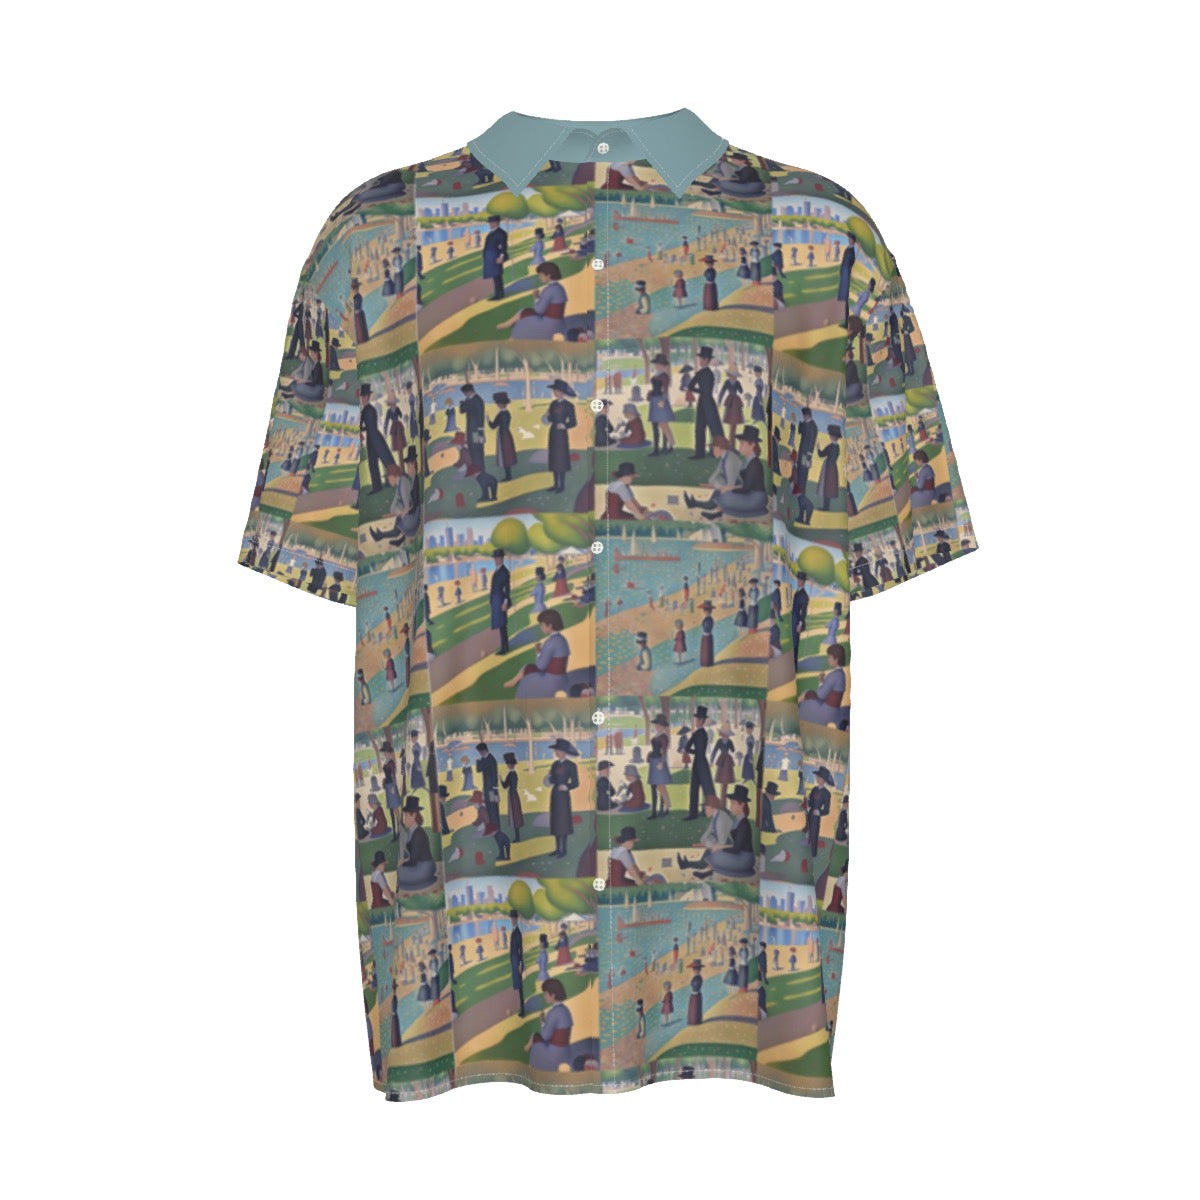 Le Parc -- Men's Imitation Silk Short-Sleeved Shirt